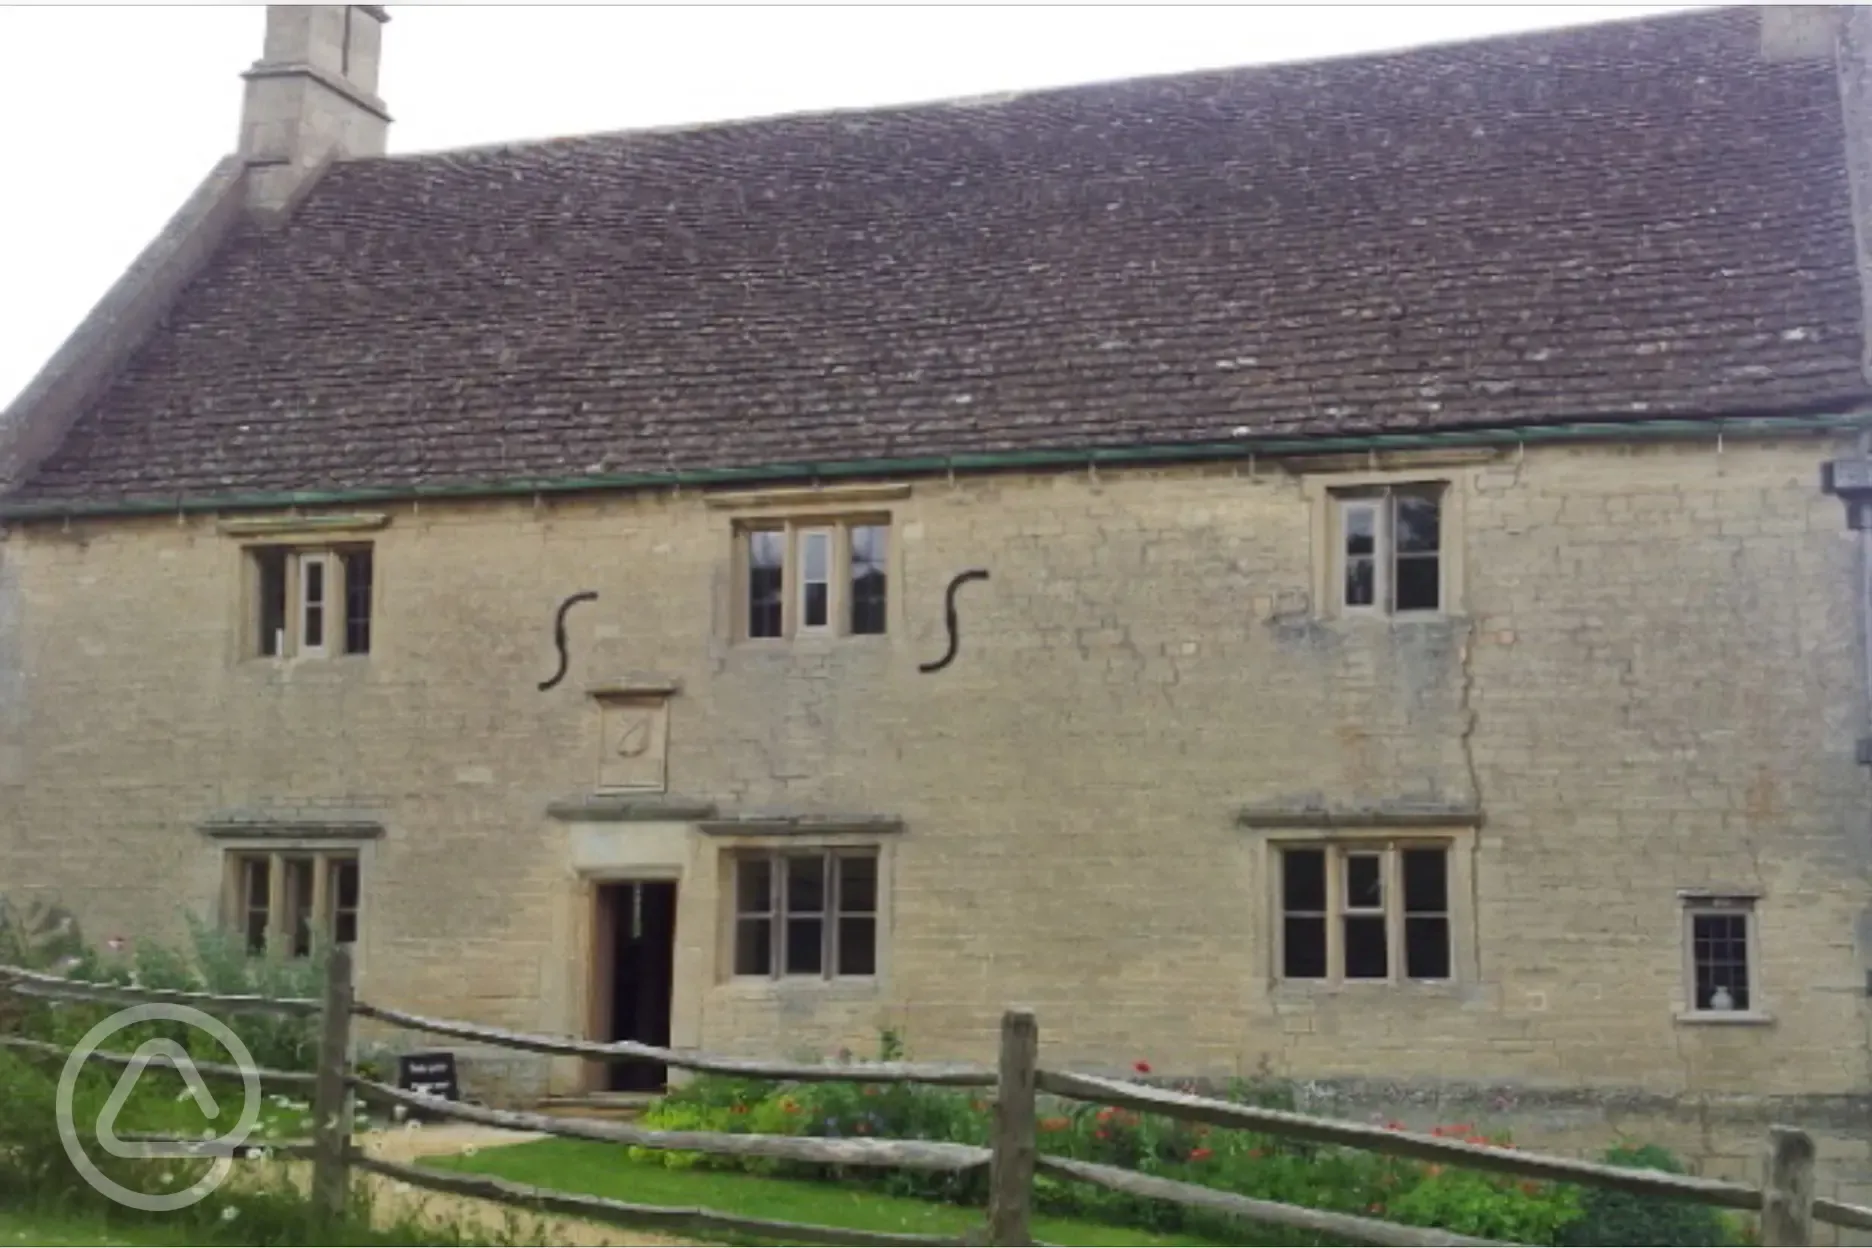 Woolsthorpe Manor, Sir Isaac Newton's house.